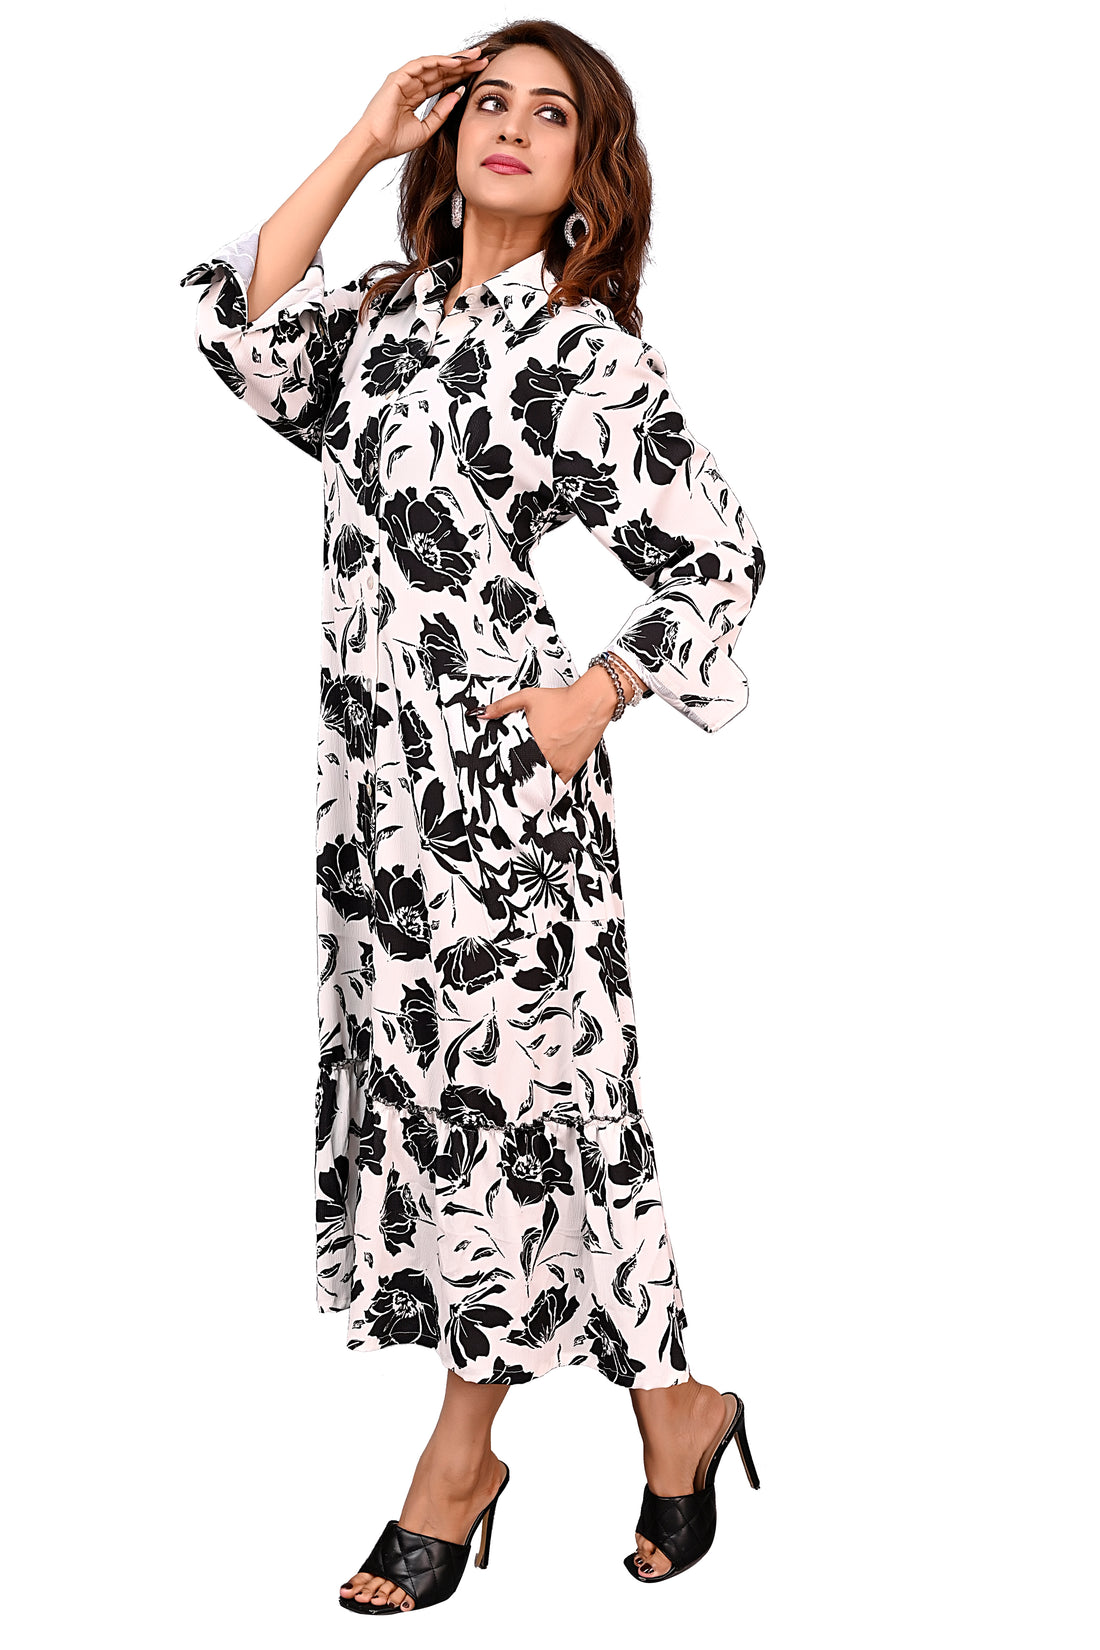 Nirmal online Premium Quality Digital Printed Tunic Dress for Women in Black & White Colour